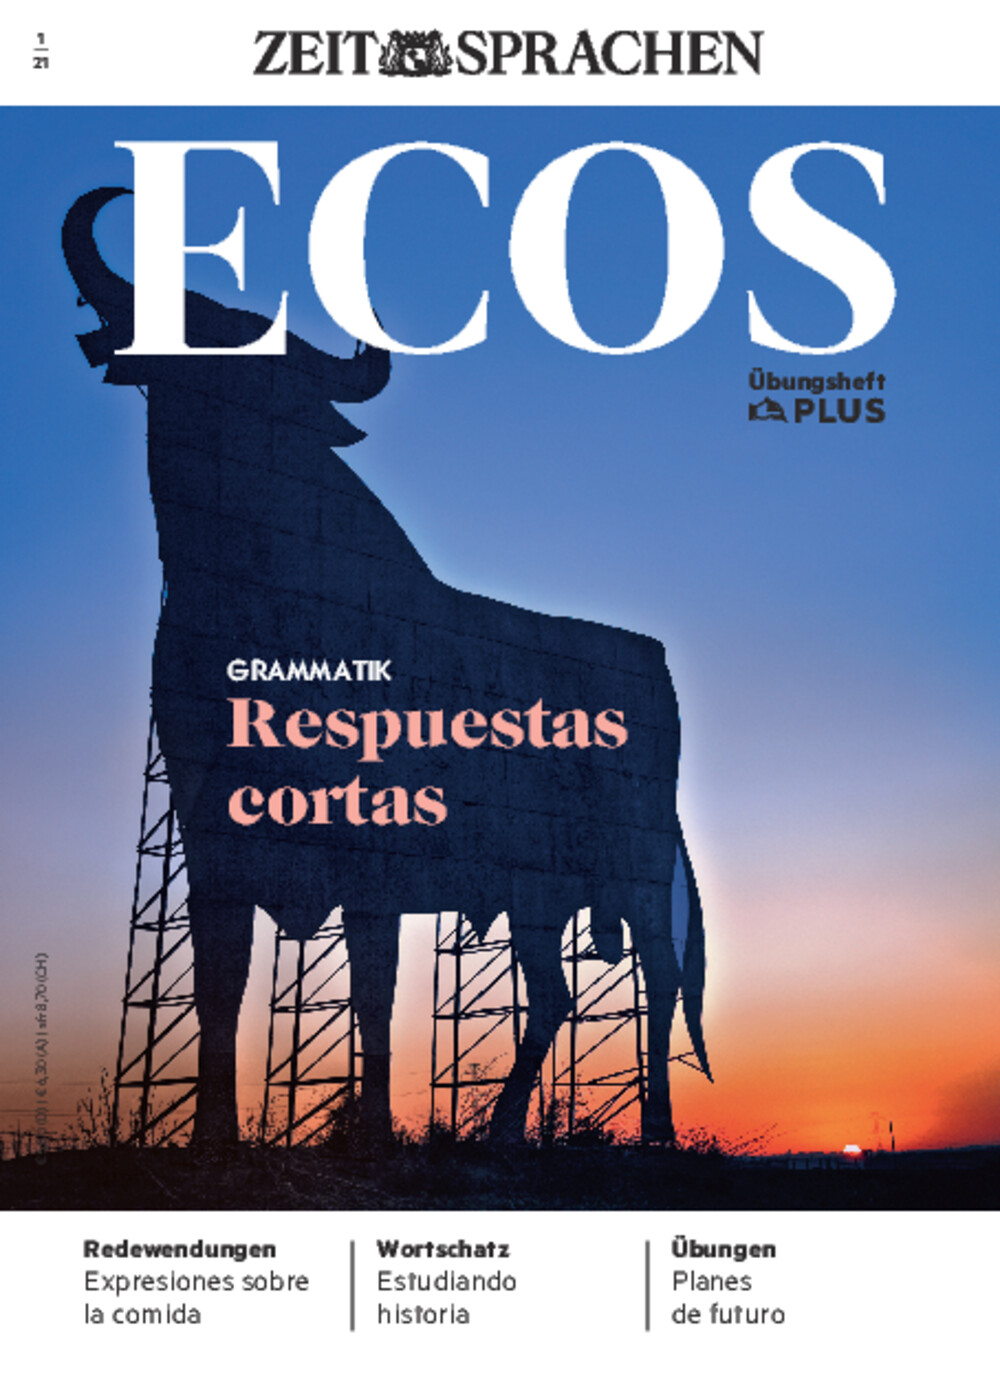 Ecos PLUS 01/2021